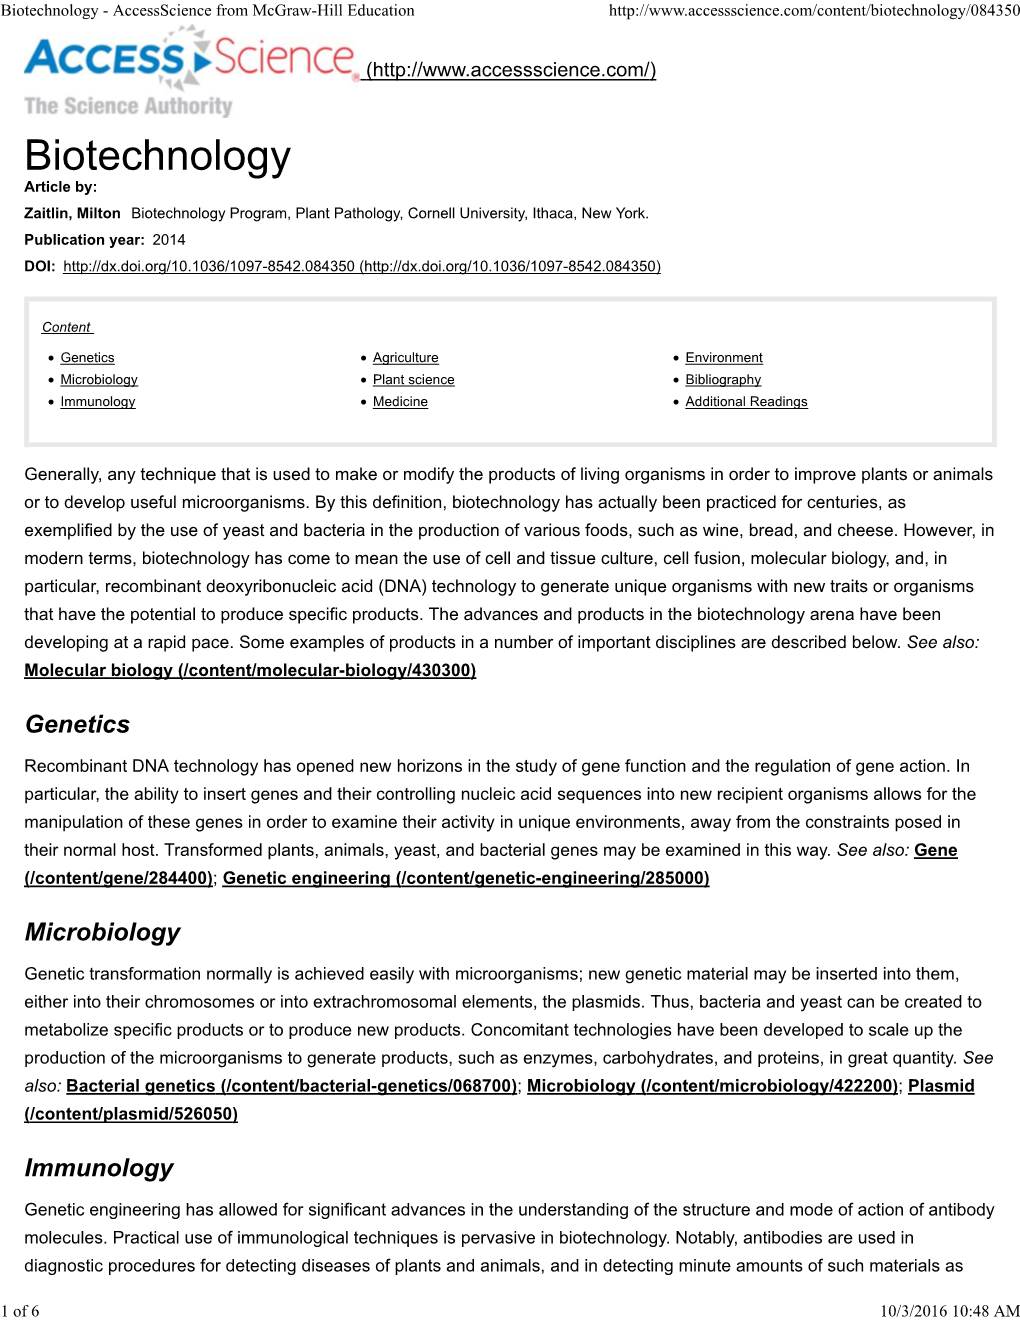 Genetics Microbiology Immunology